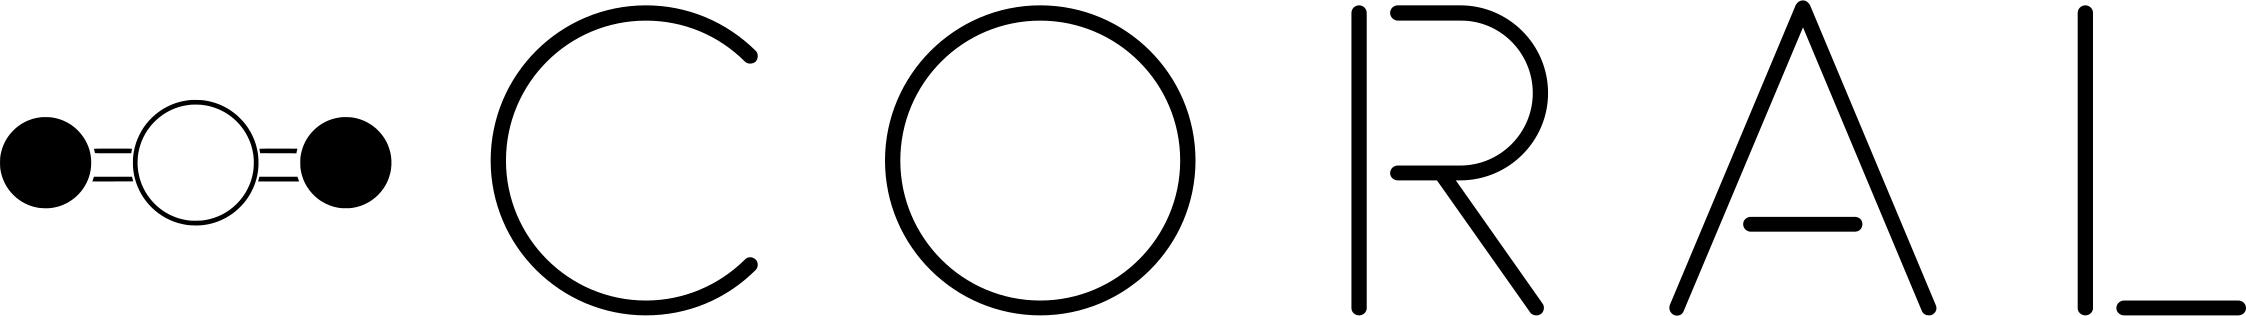 Coral logotype